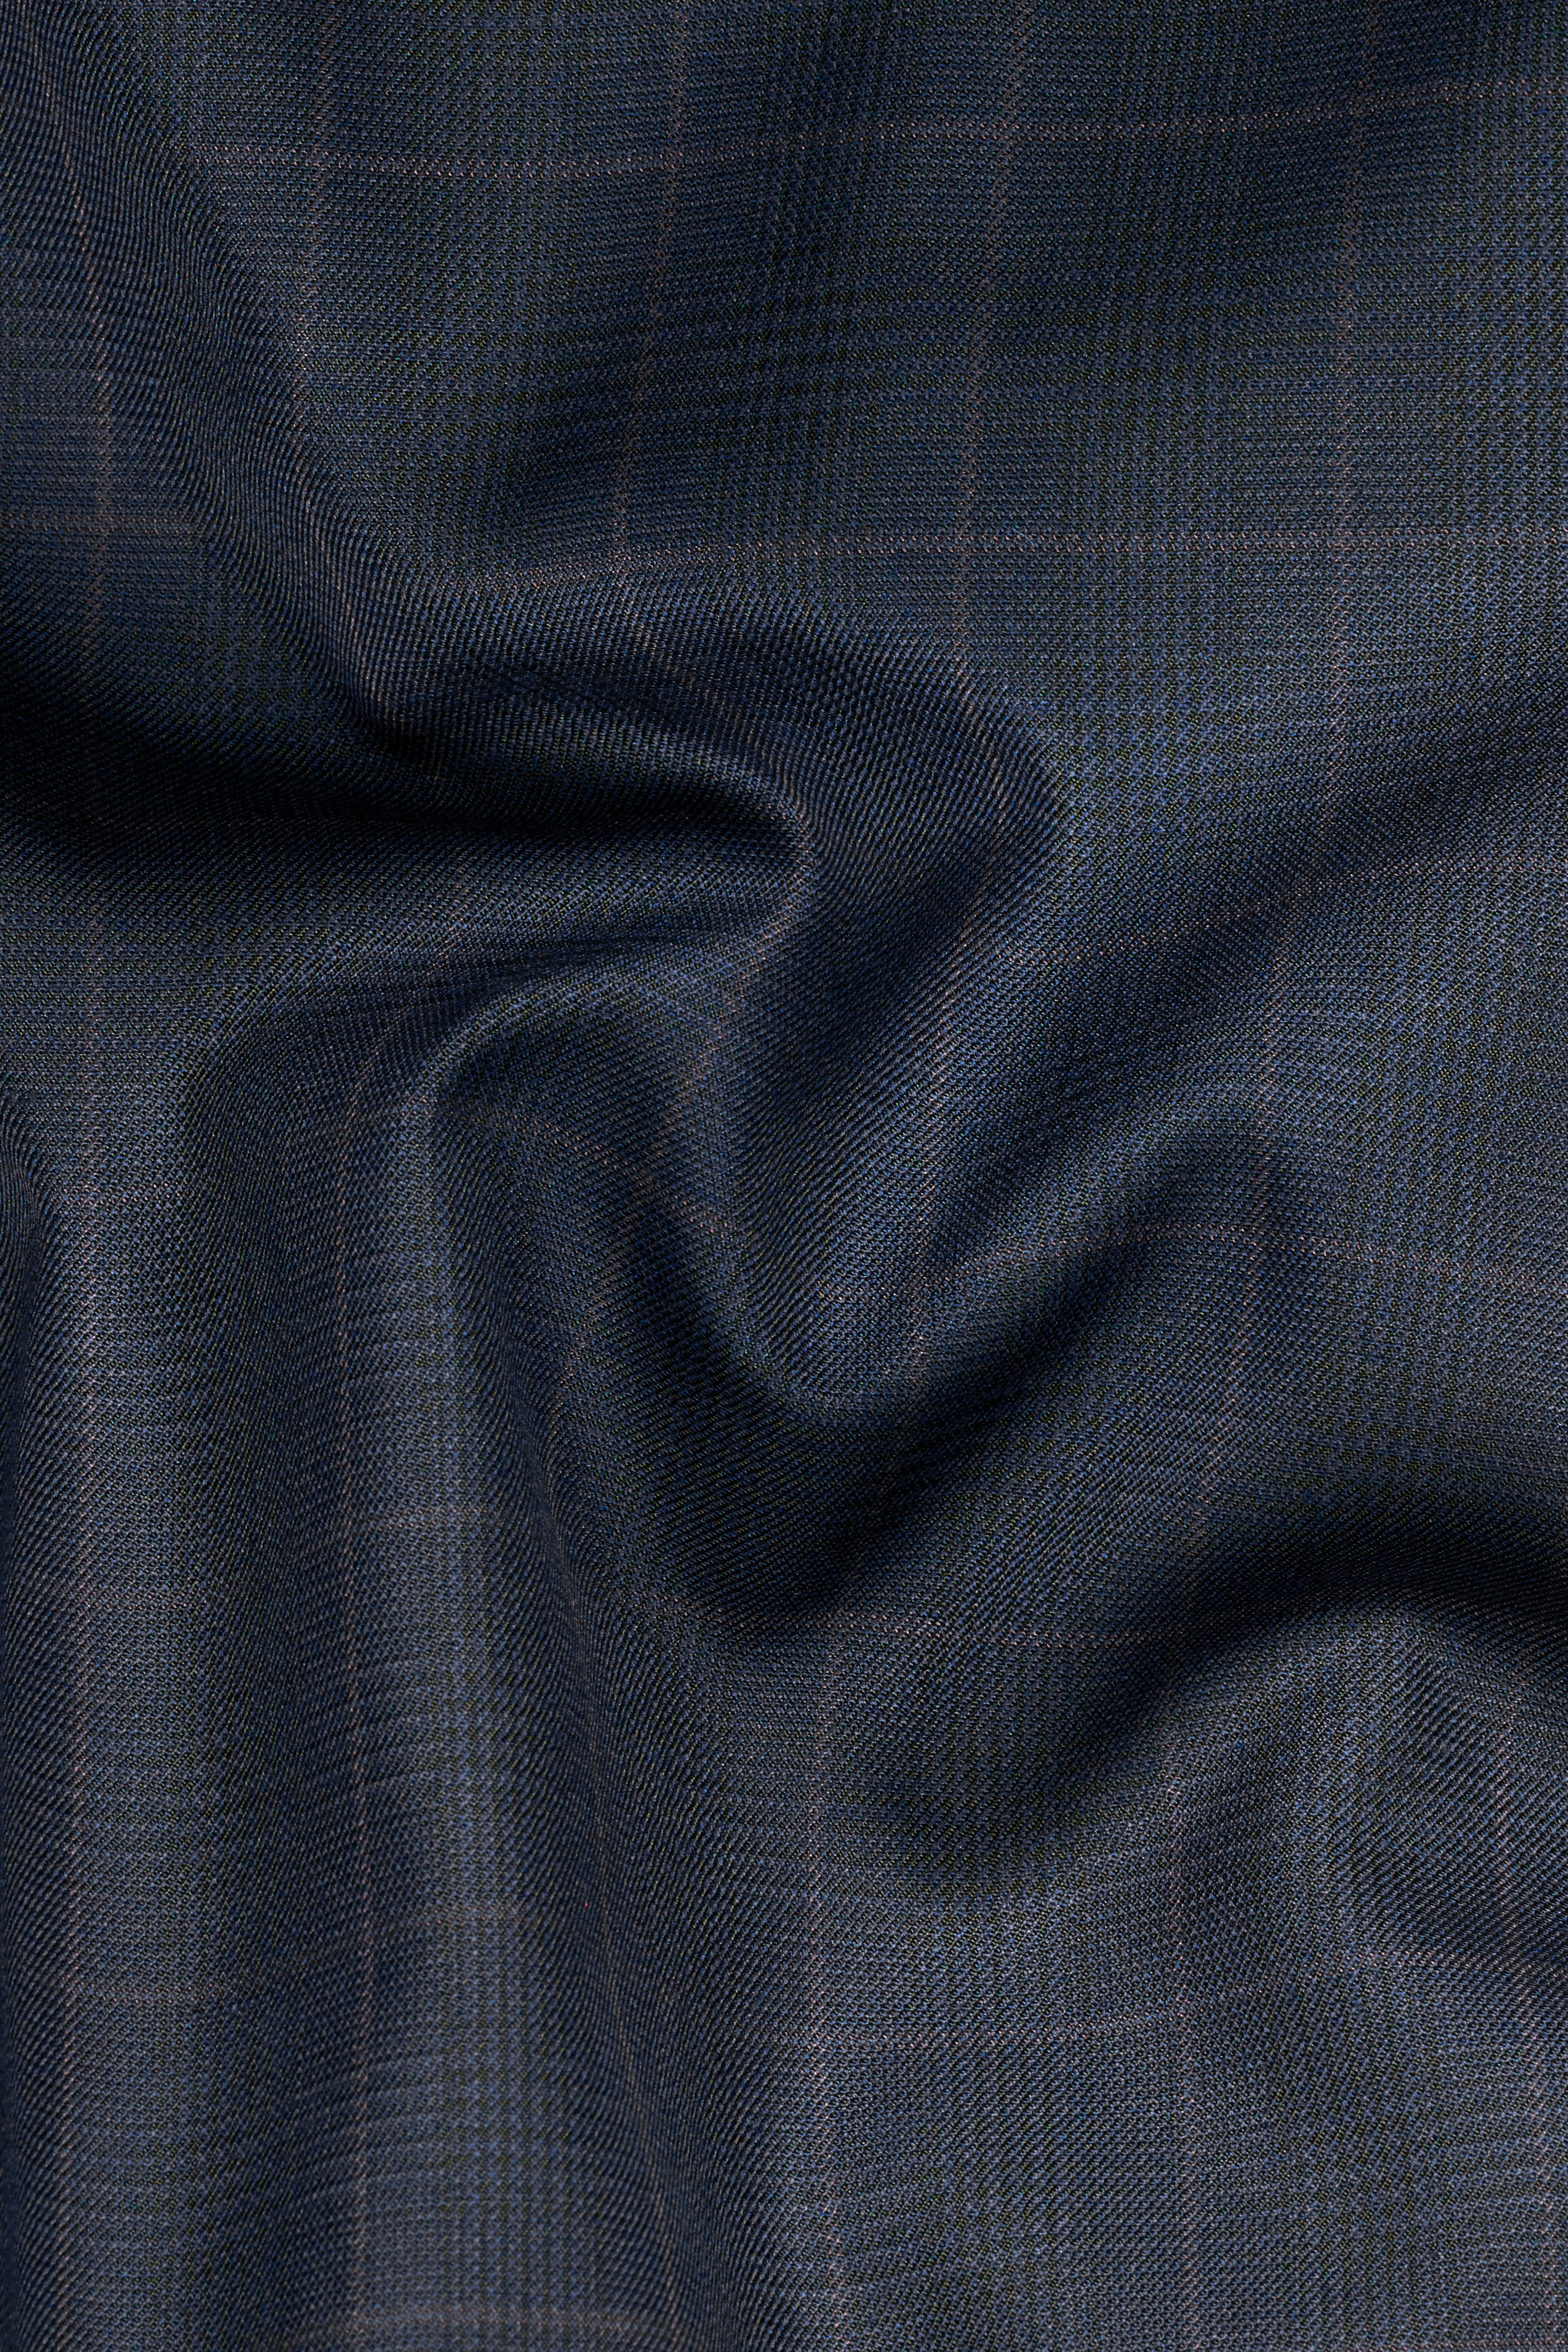 Baltic Blue Checkered Wool Rich Waistcoat V2737-36, V2737-38, V2737-40, V2737-42, V2737-44, V2737-46, V2737-48, V2737-50, V2737-52, V2737-54, V2737-56, V2737-58, V2737-60